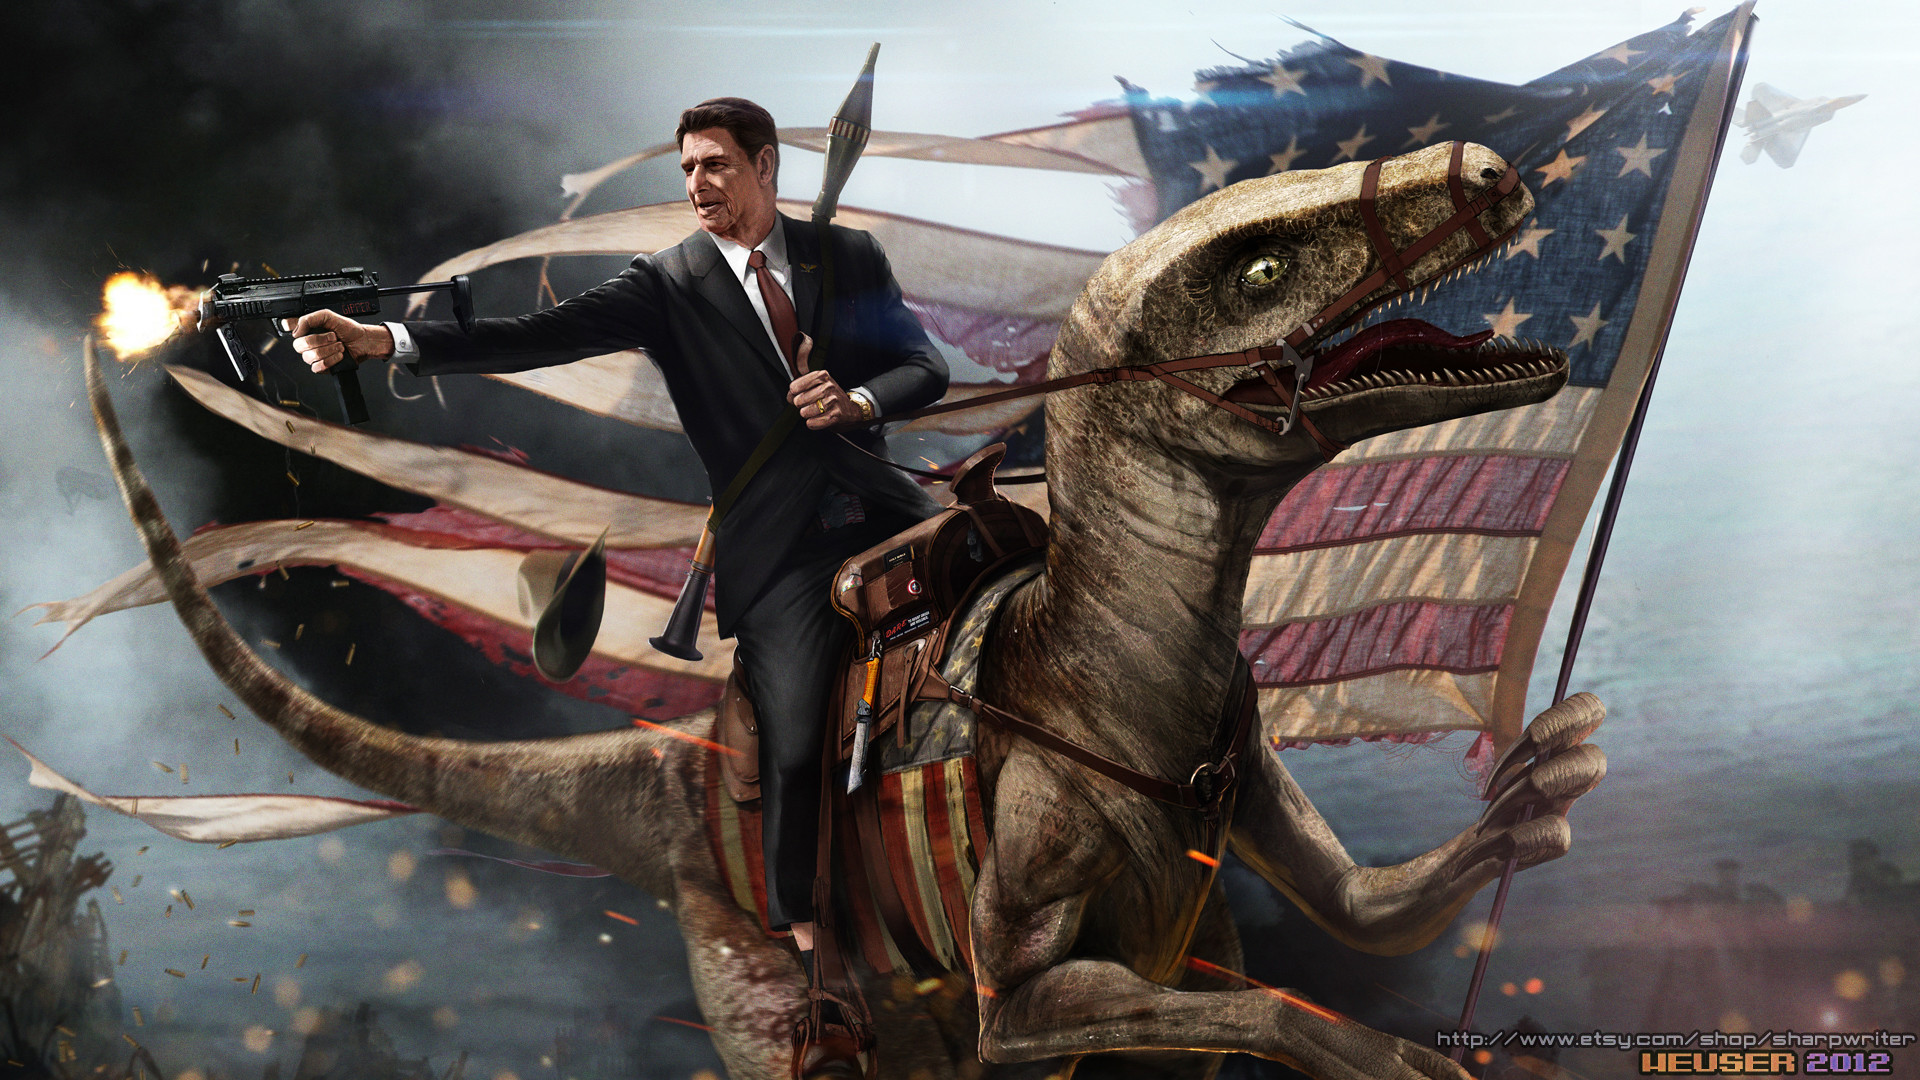 Ronald Reagan Riding A Velociraptor By Sharpwriter 1920x1080